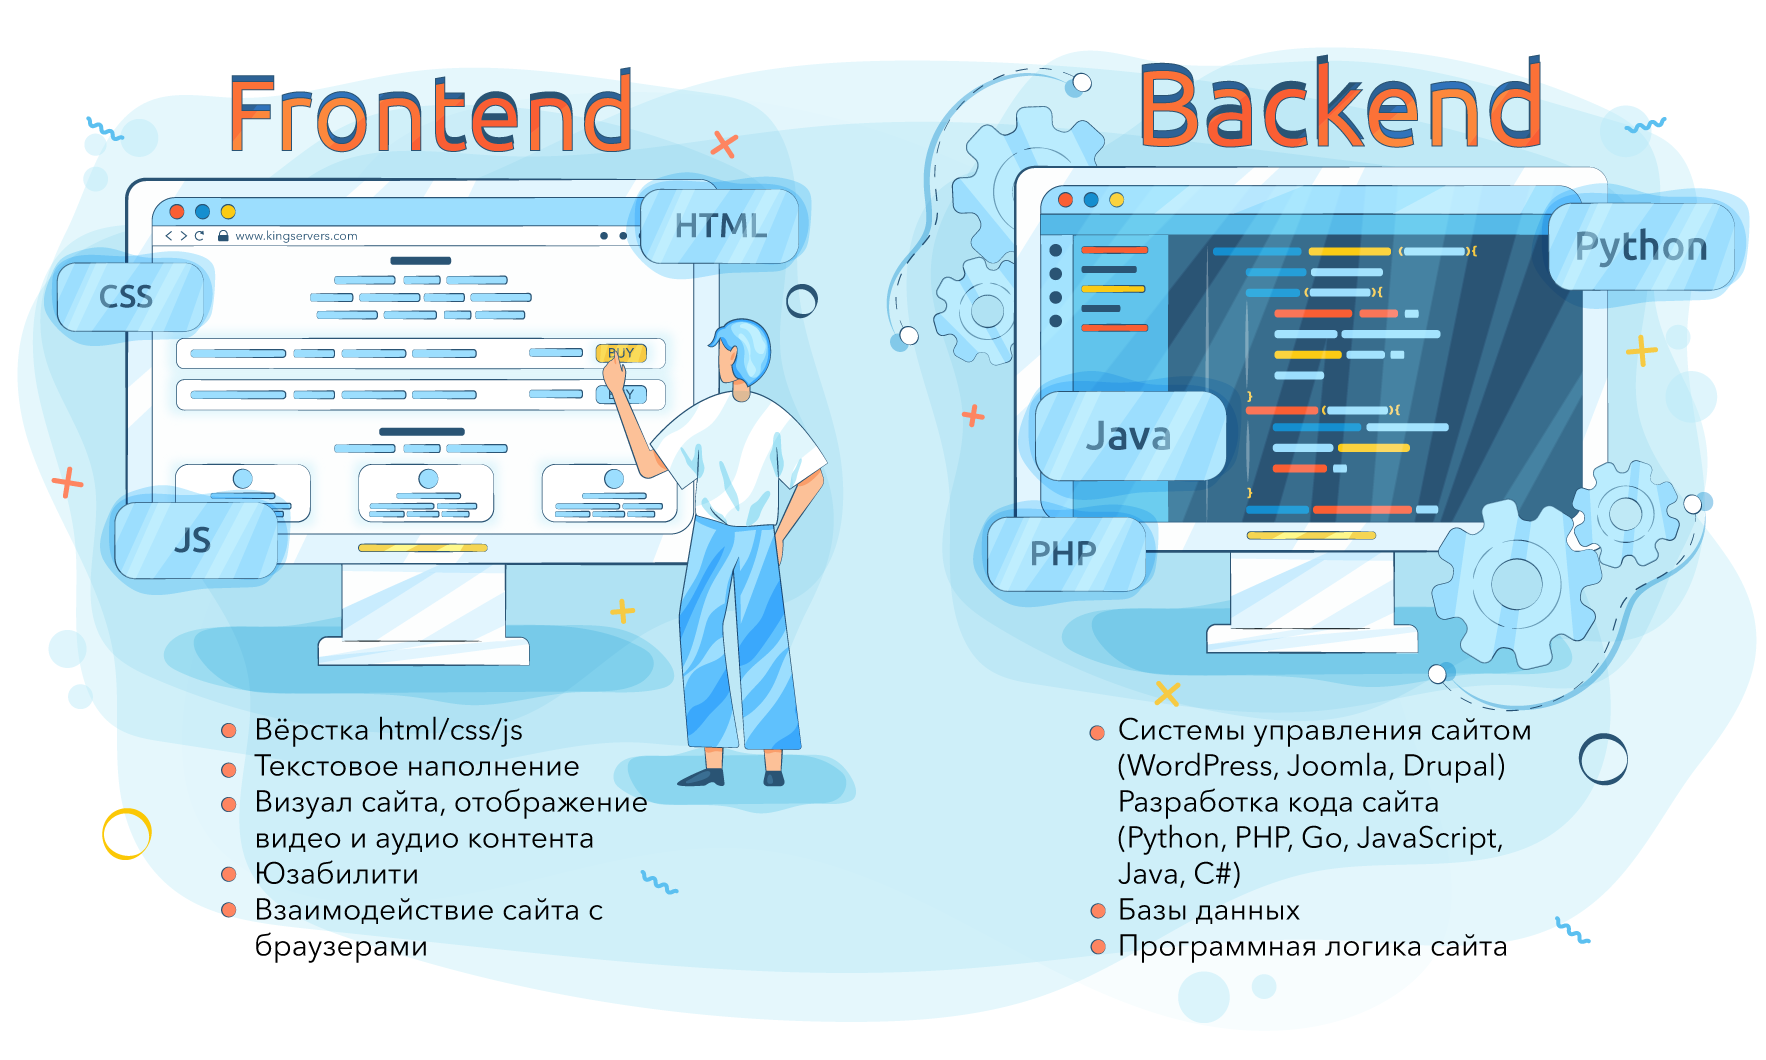 Back posting. Фронтенд сайта. Фронтенд и бэкенд. Frontend и backend разработчики. Разница между фронтенд и бэкенд.